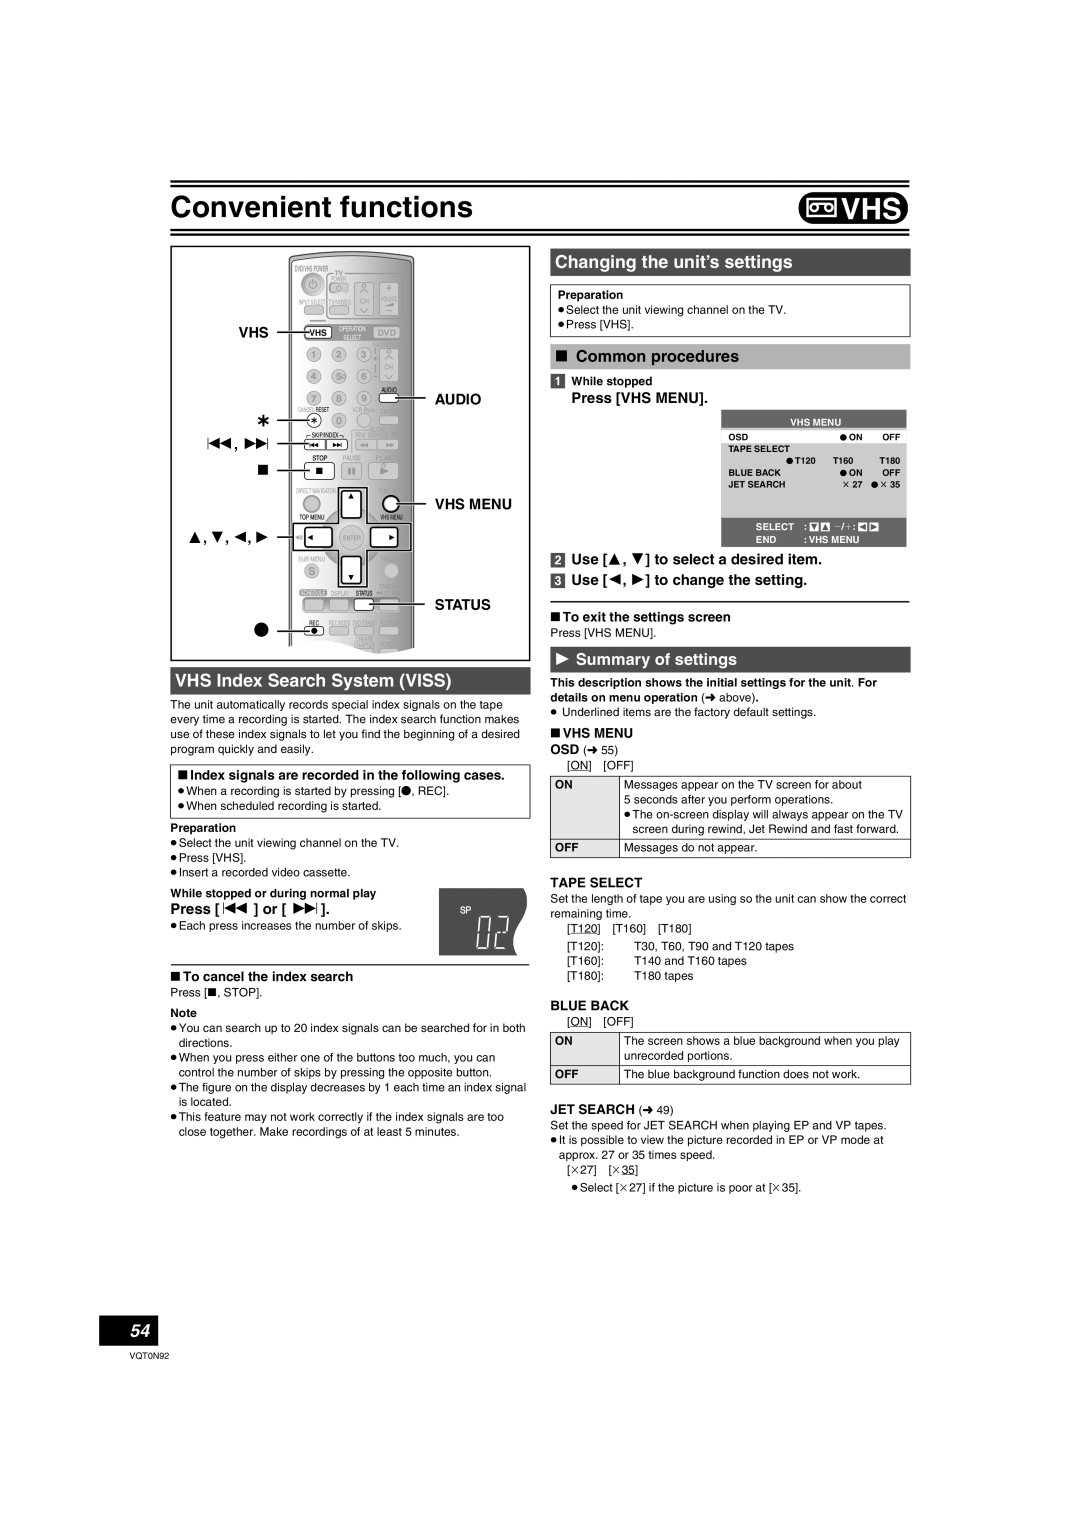 Panasonic DMR-ES30V VHS Index Search System VISS, Summary of settings, Audio, Vhs Menu, Press or, Press VHS MENU, 3, 4, 2 